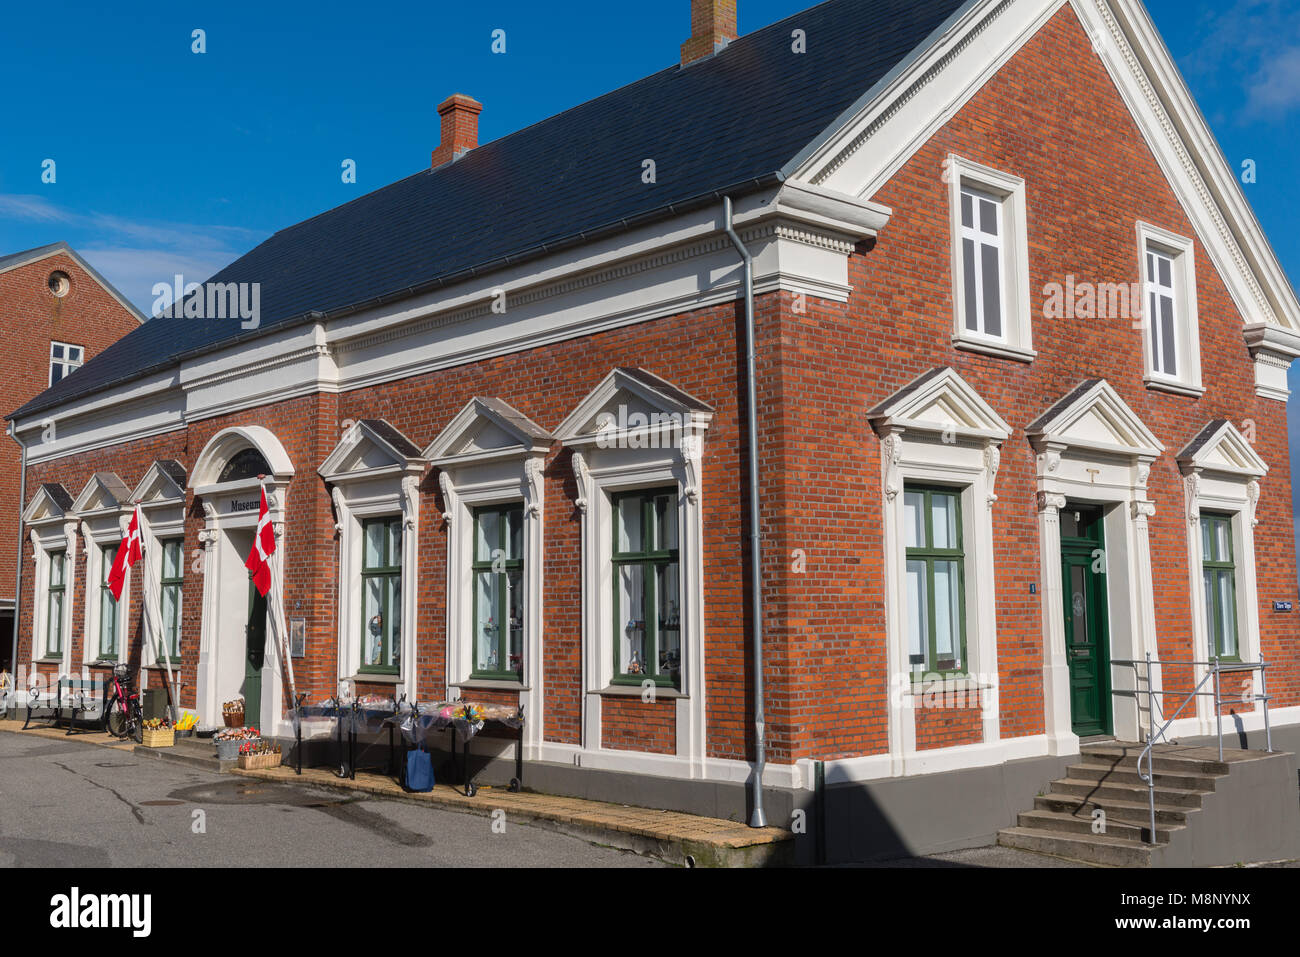 The local museum in a historical house, Nordby, island of Fanoe, Jutland, Denmark, Scandinavia Stock Photo